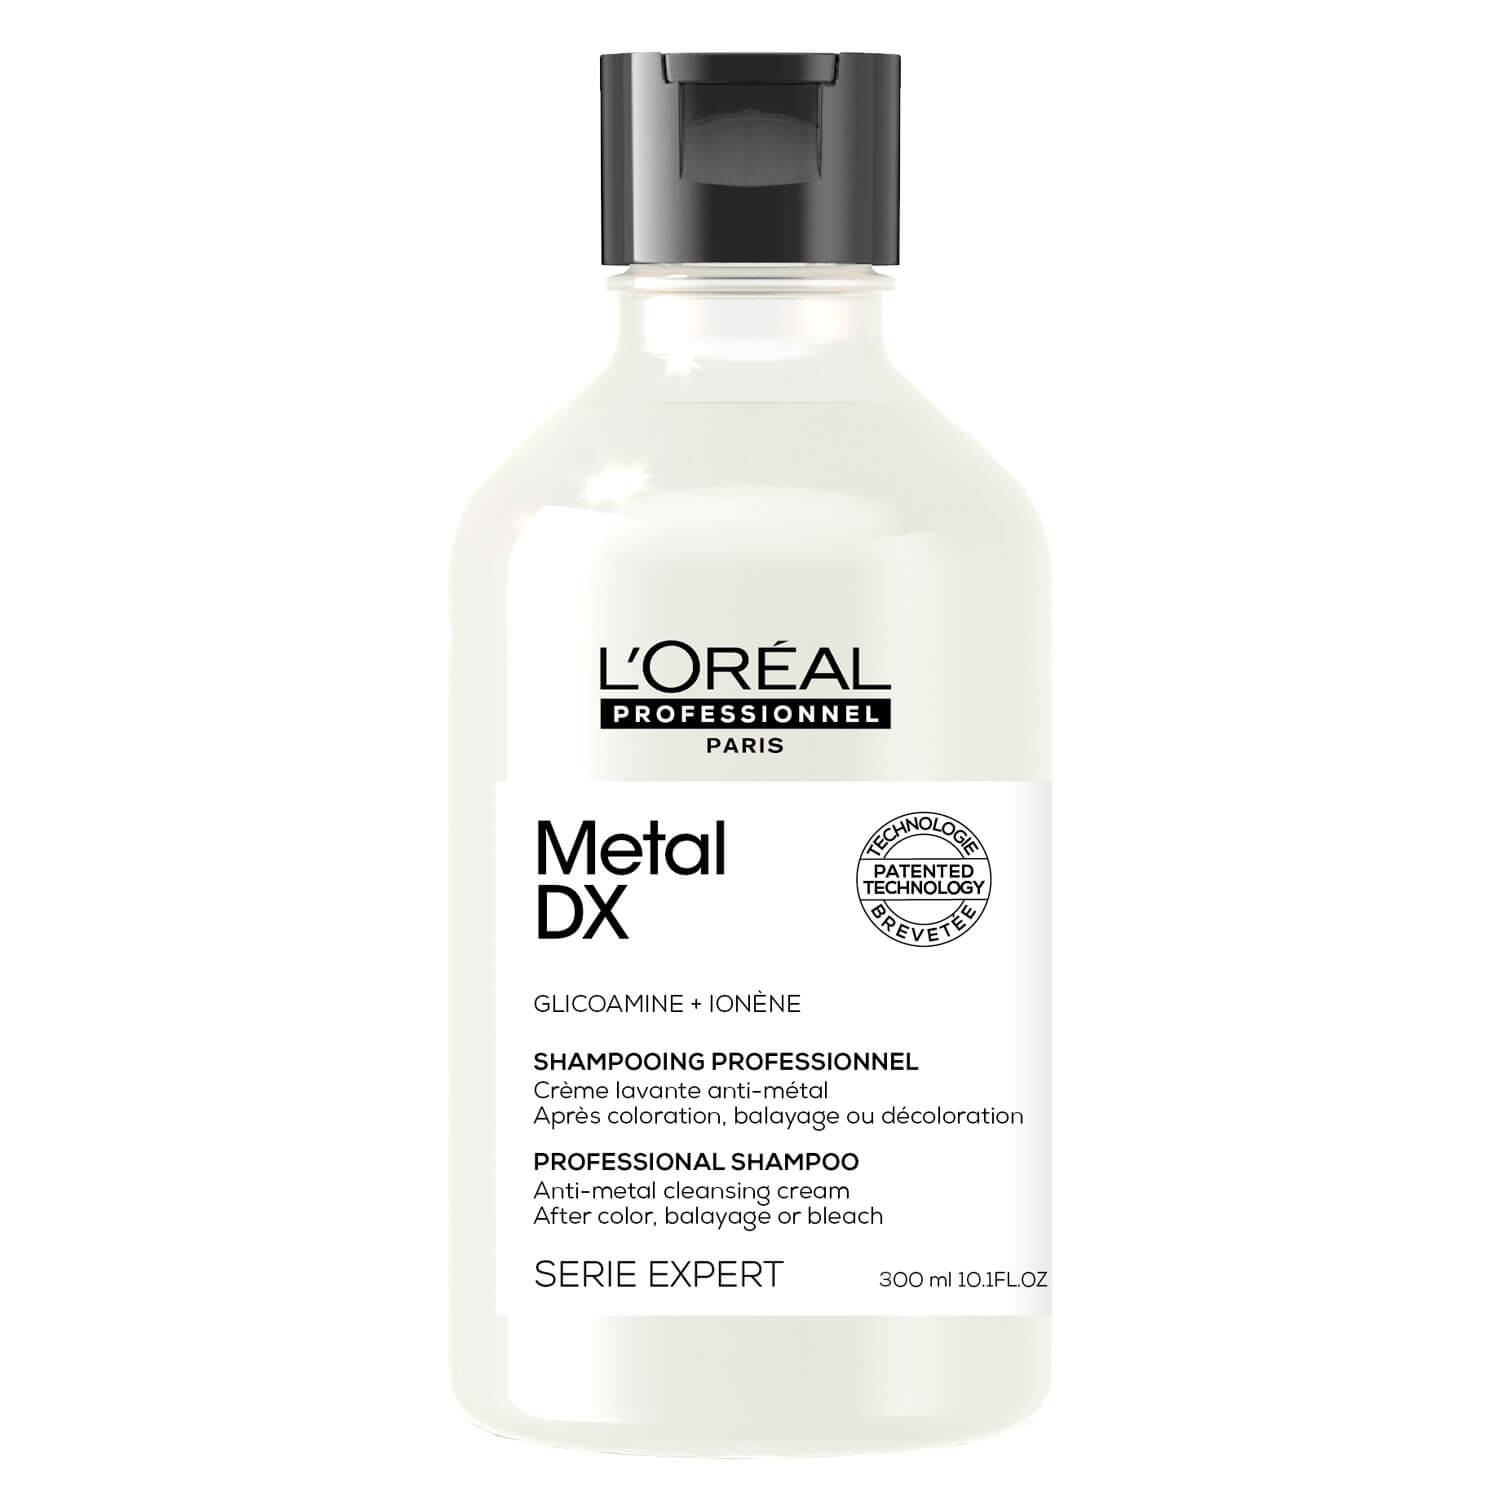 Produktbild von Série Expert Metal DX - Professional Shampoo